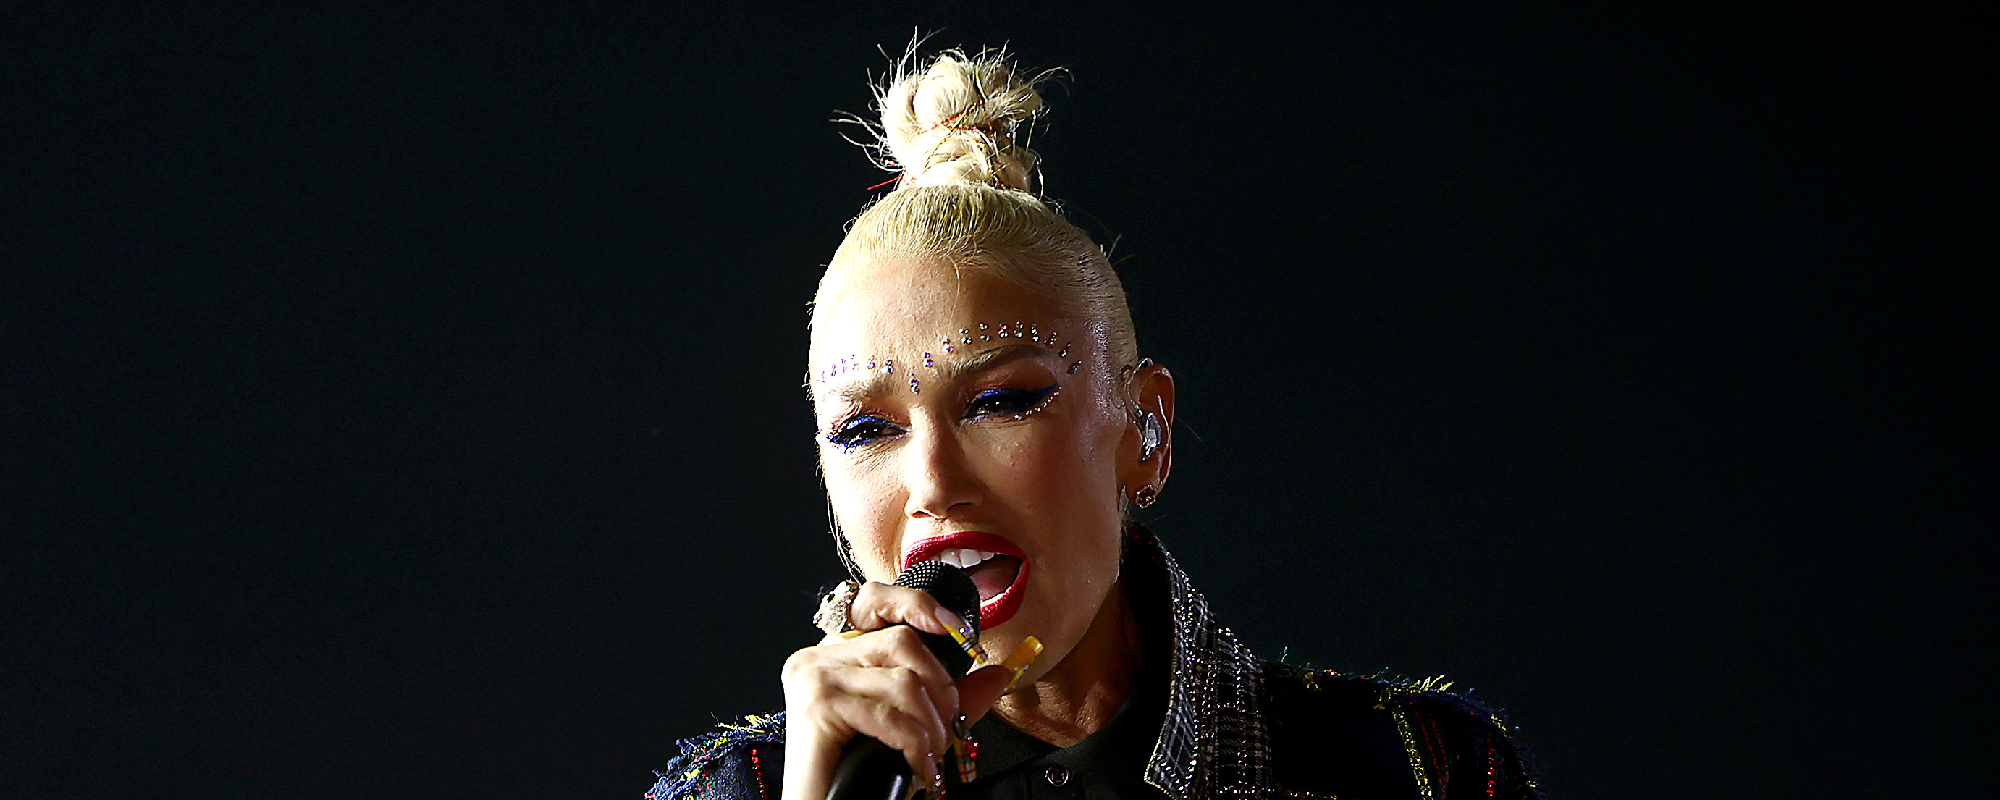 No Doubt Fans Overwhelmed as Gwen Stefani Puts on “Masterclass” Performance for Coachella Reunion